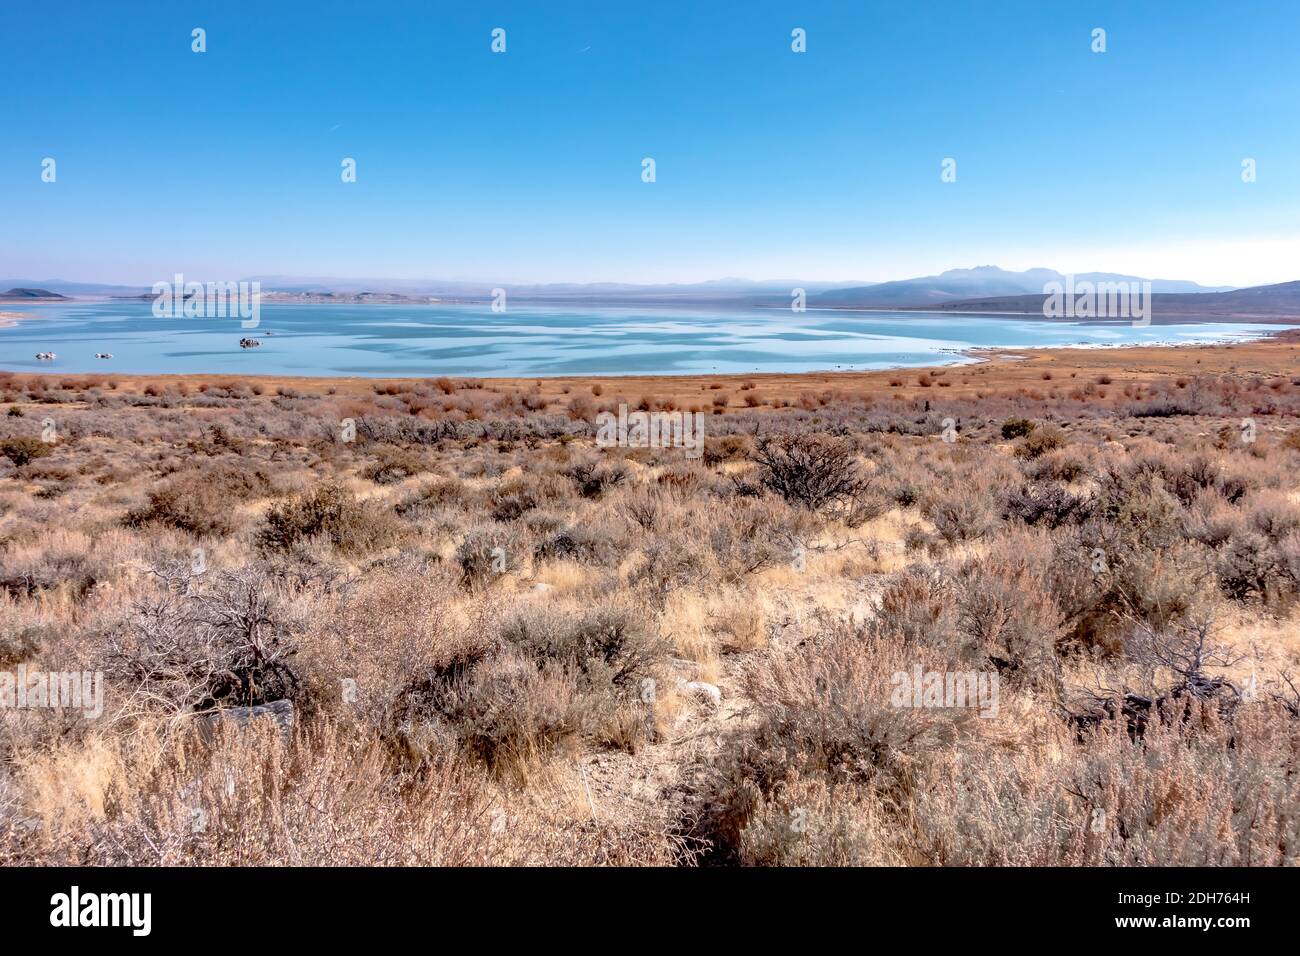 Scenery around mono lake in california Stock Photo